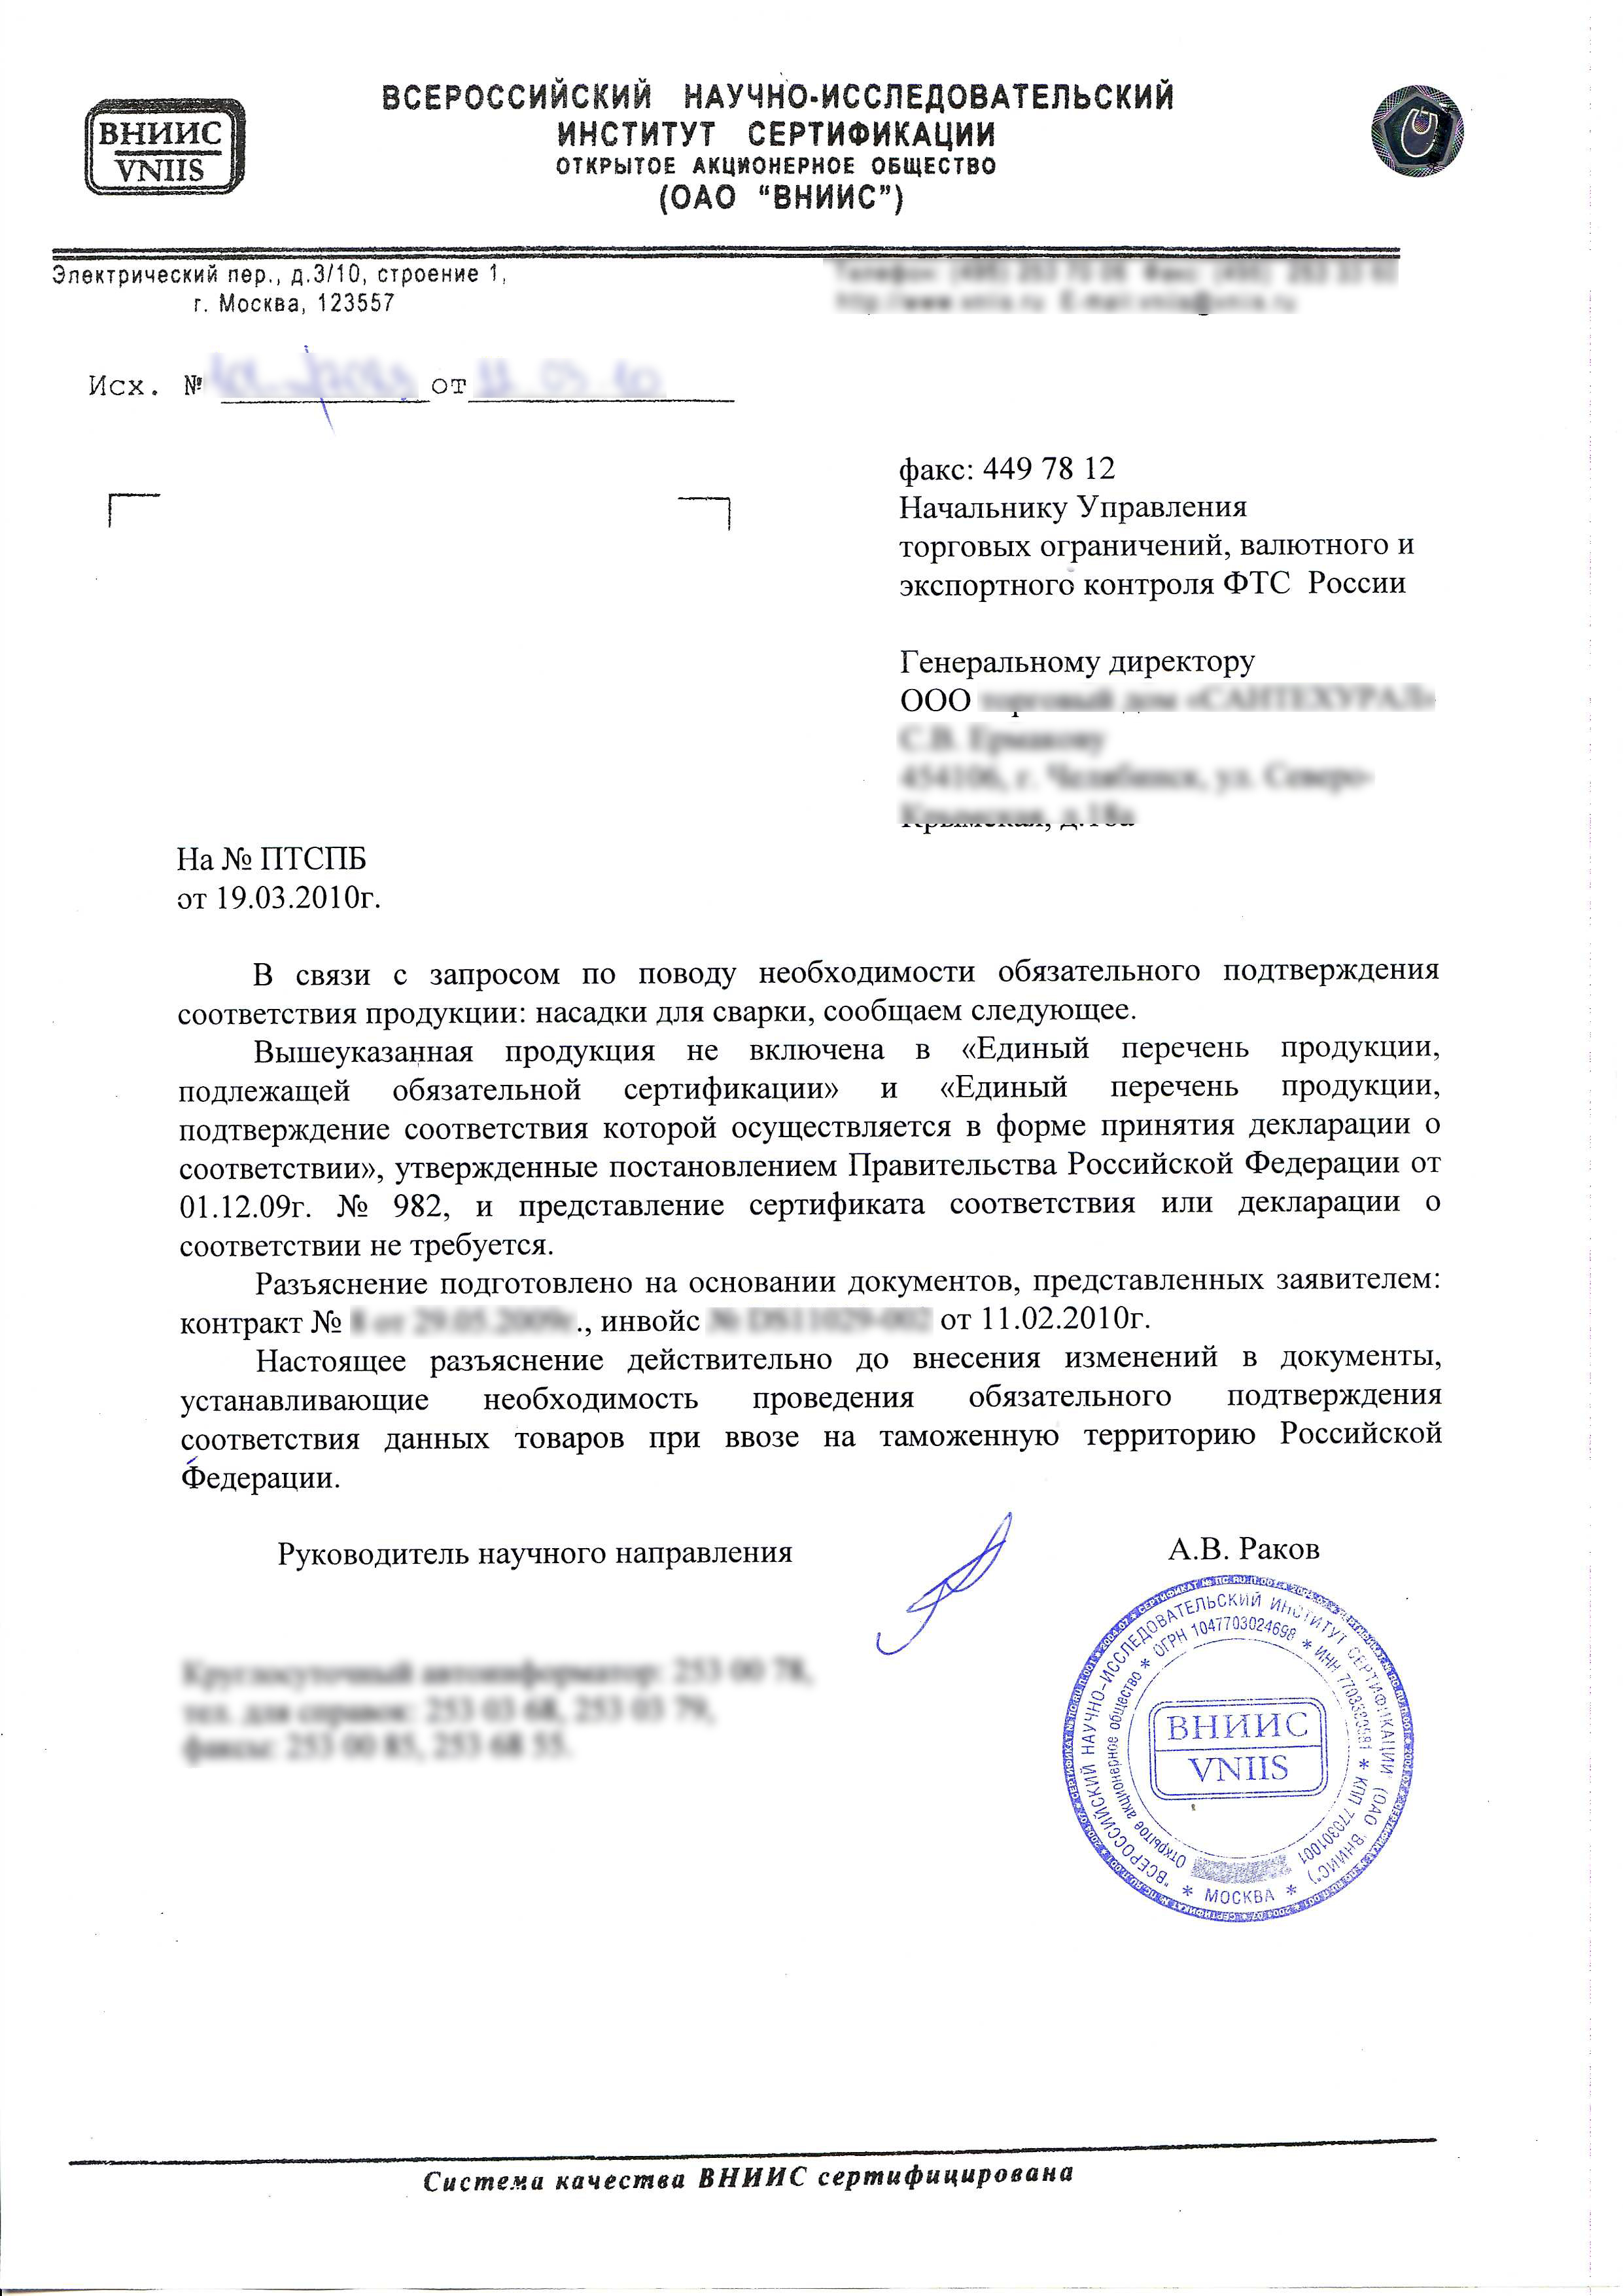 VNIIS Exemption Letter